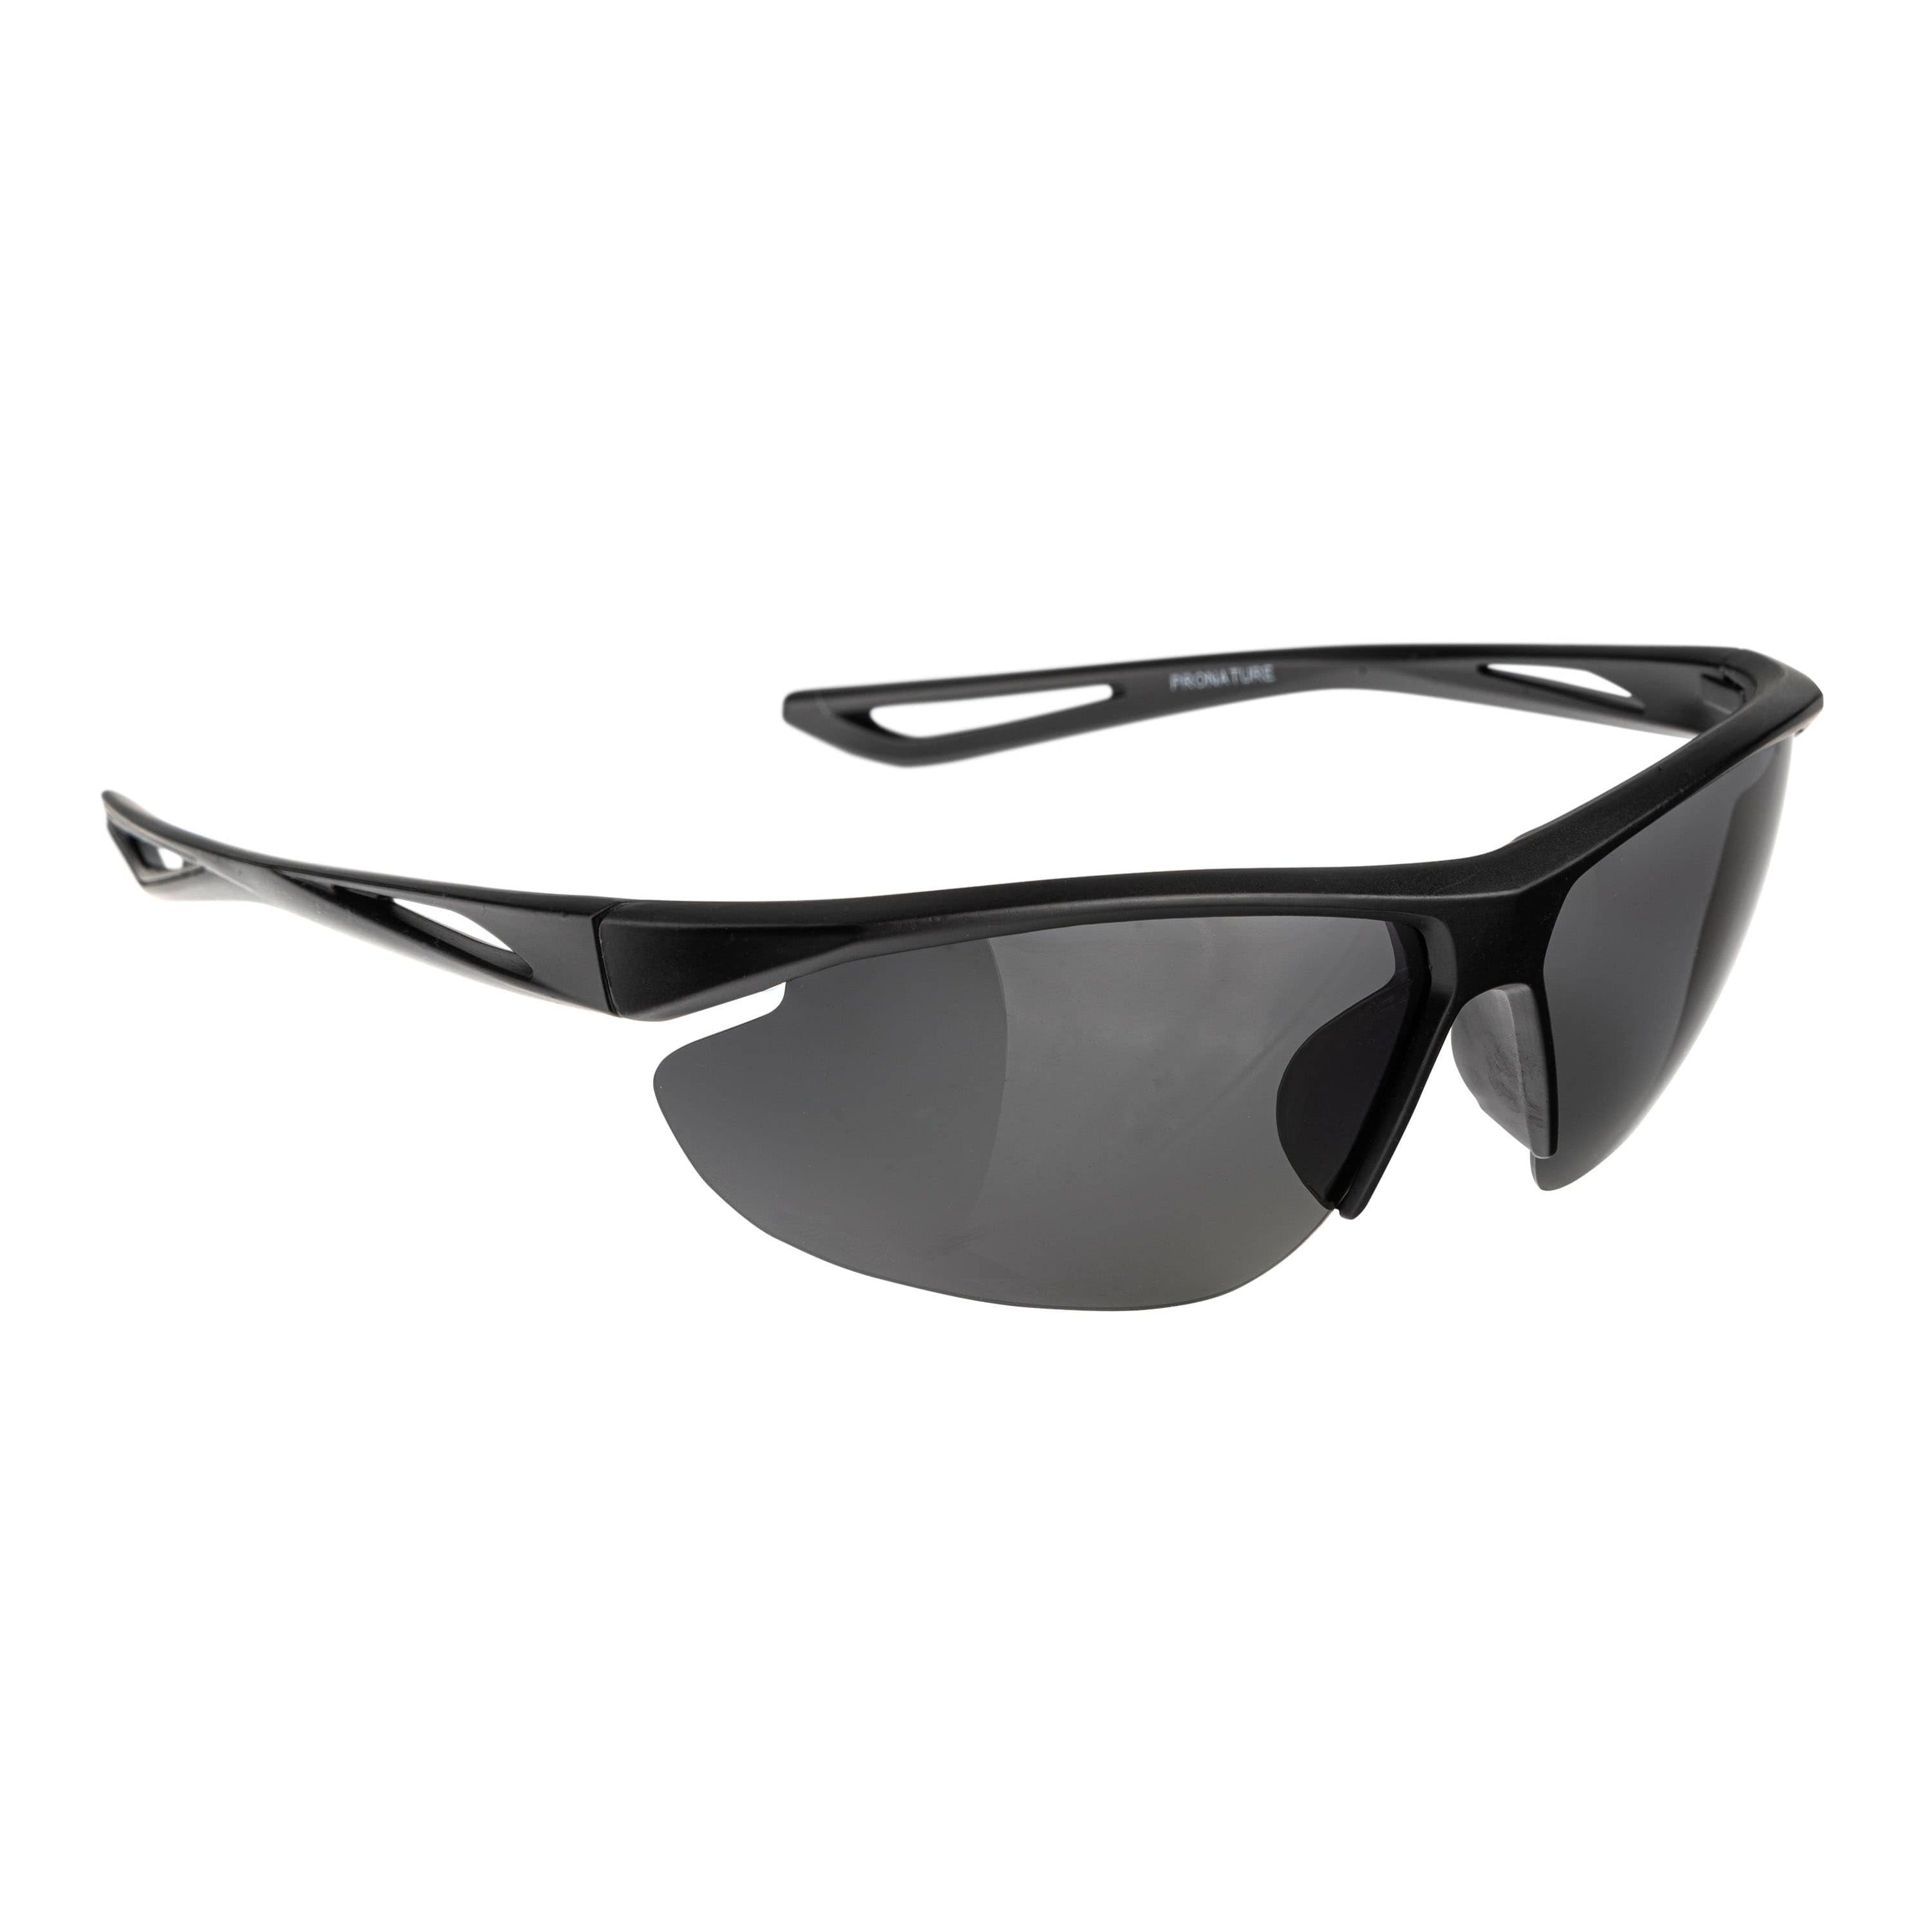 Smoked lens polarized sunglasses - Adult